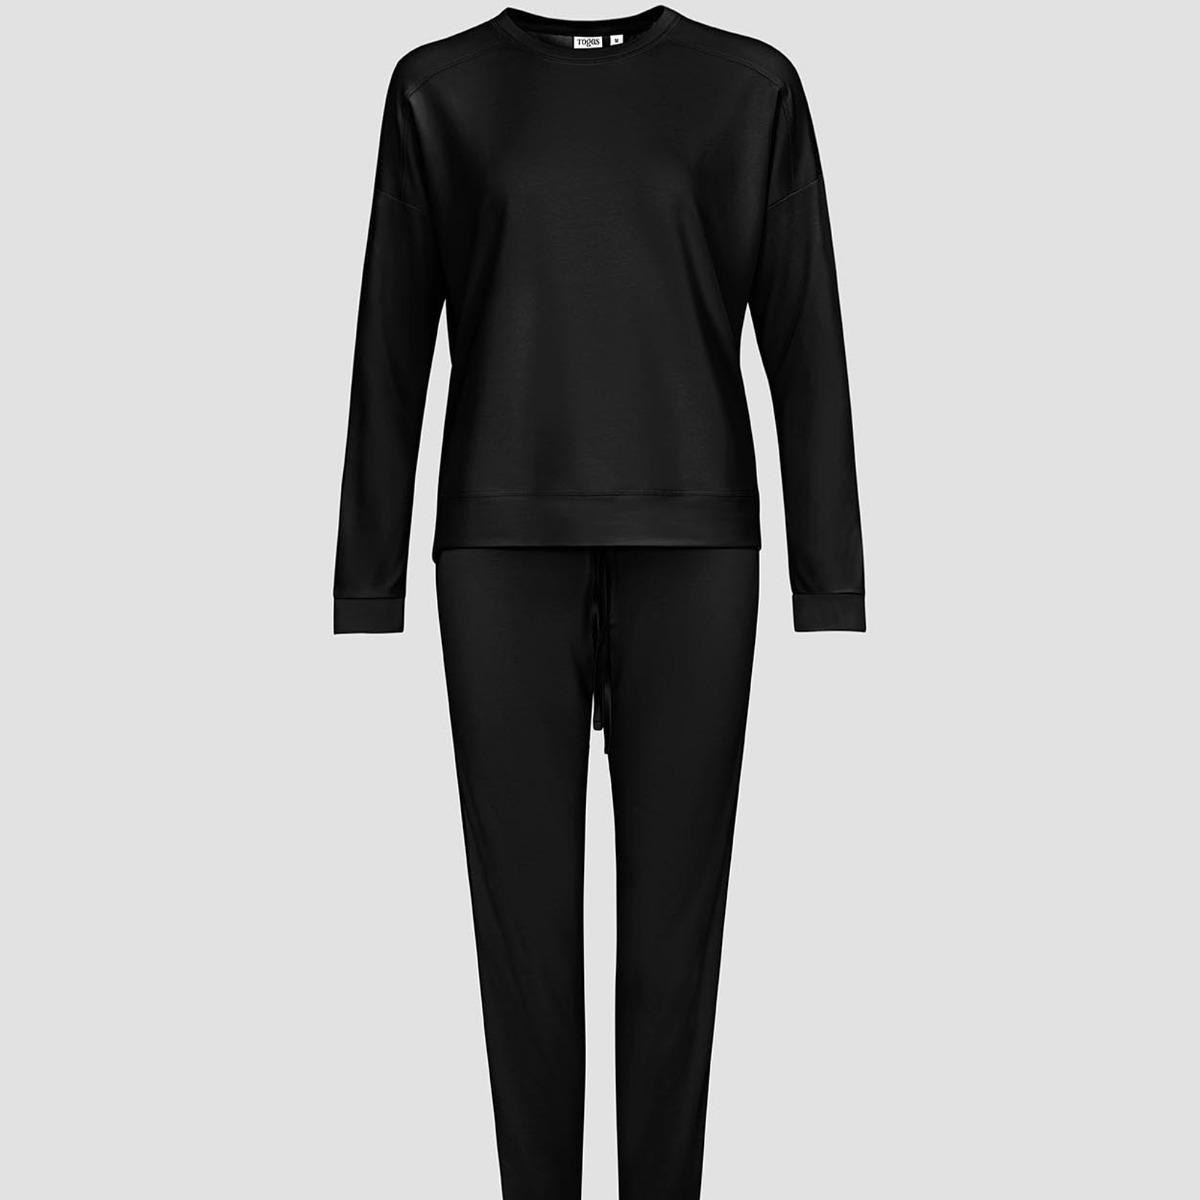 Женская пижама Togas Рене чёрная S (44)